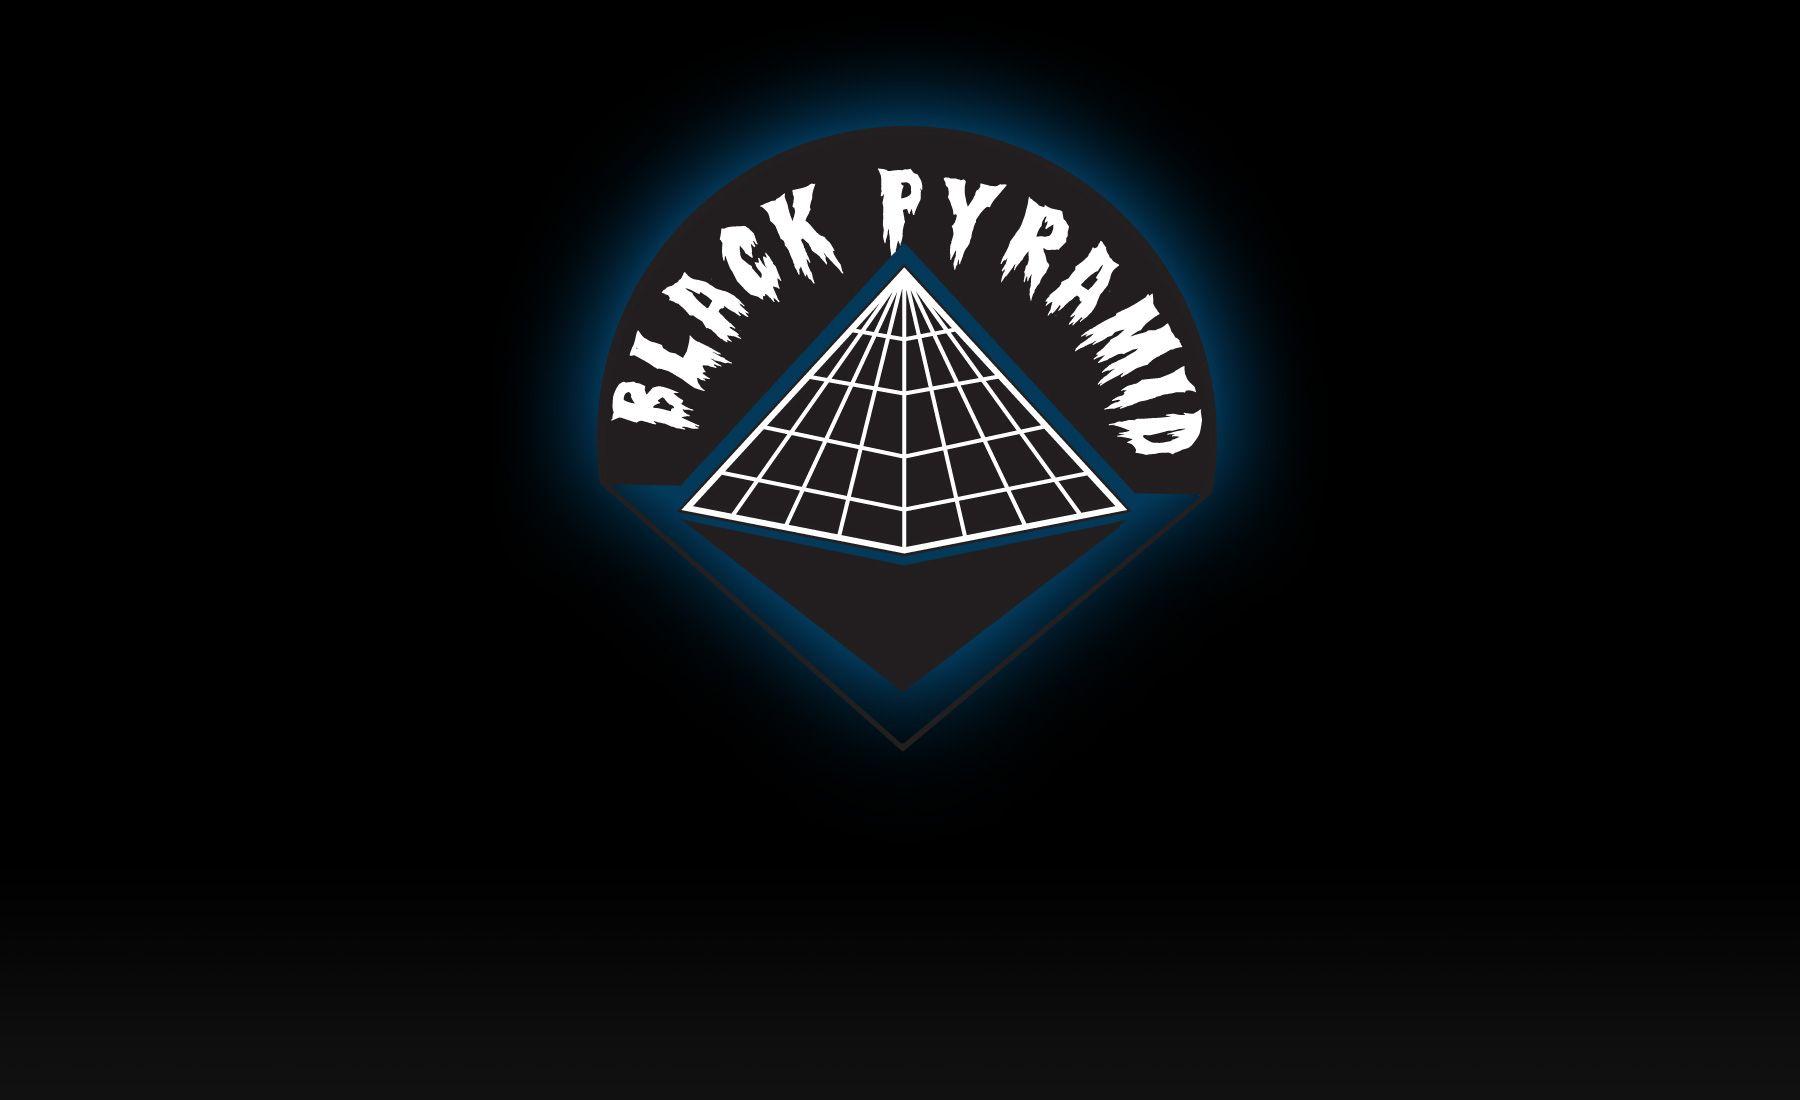 Black Pyramid Clothing Logo - W4